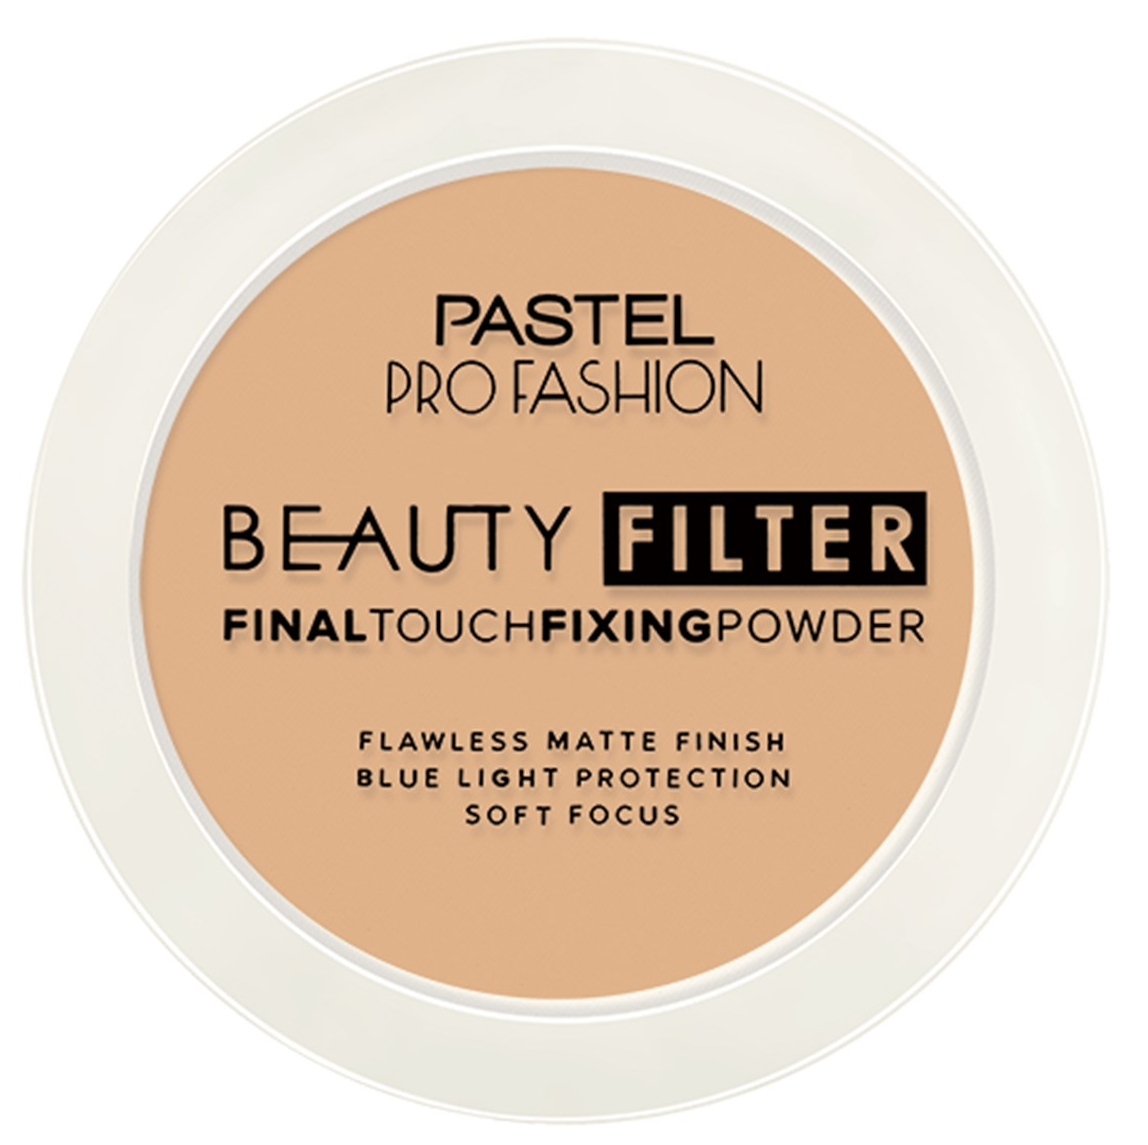 Пудра для лица Pastel Beauty Filter Fixing Powder, фиксирующая, 01, 11 г